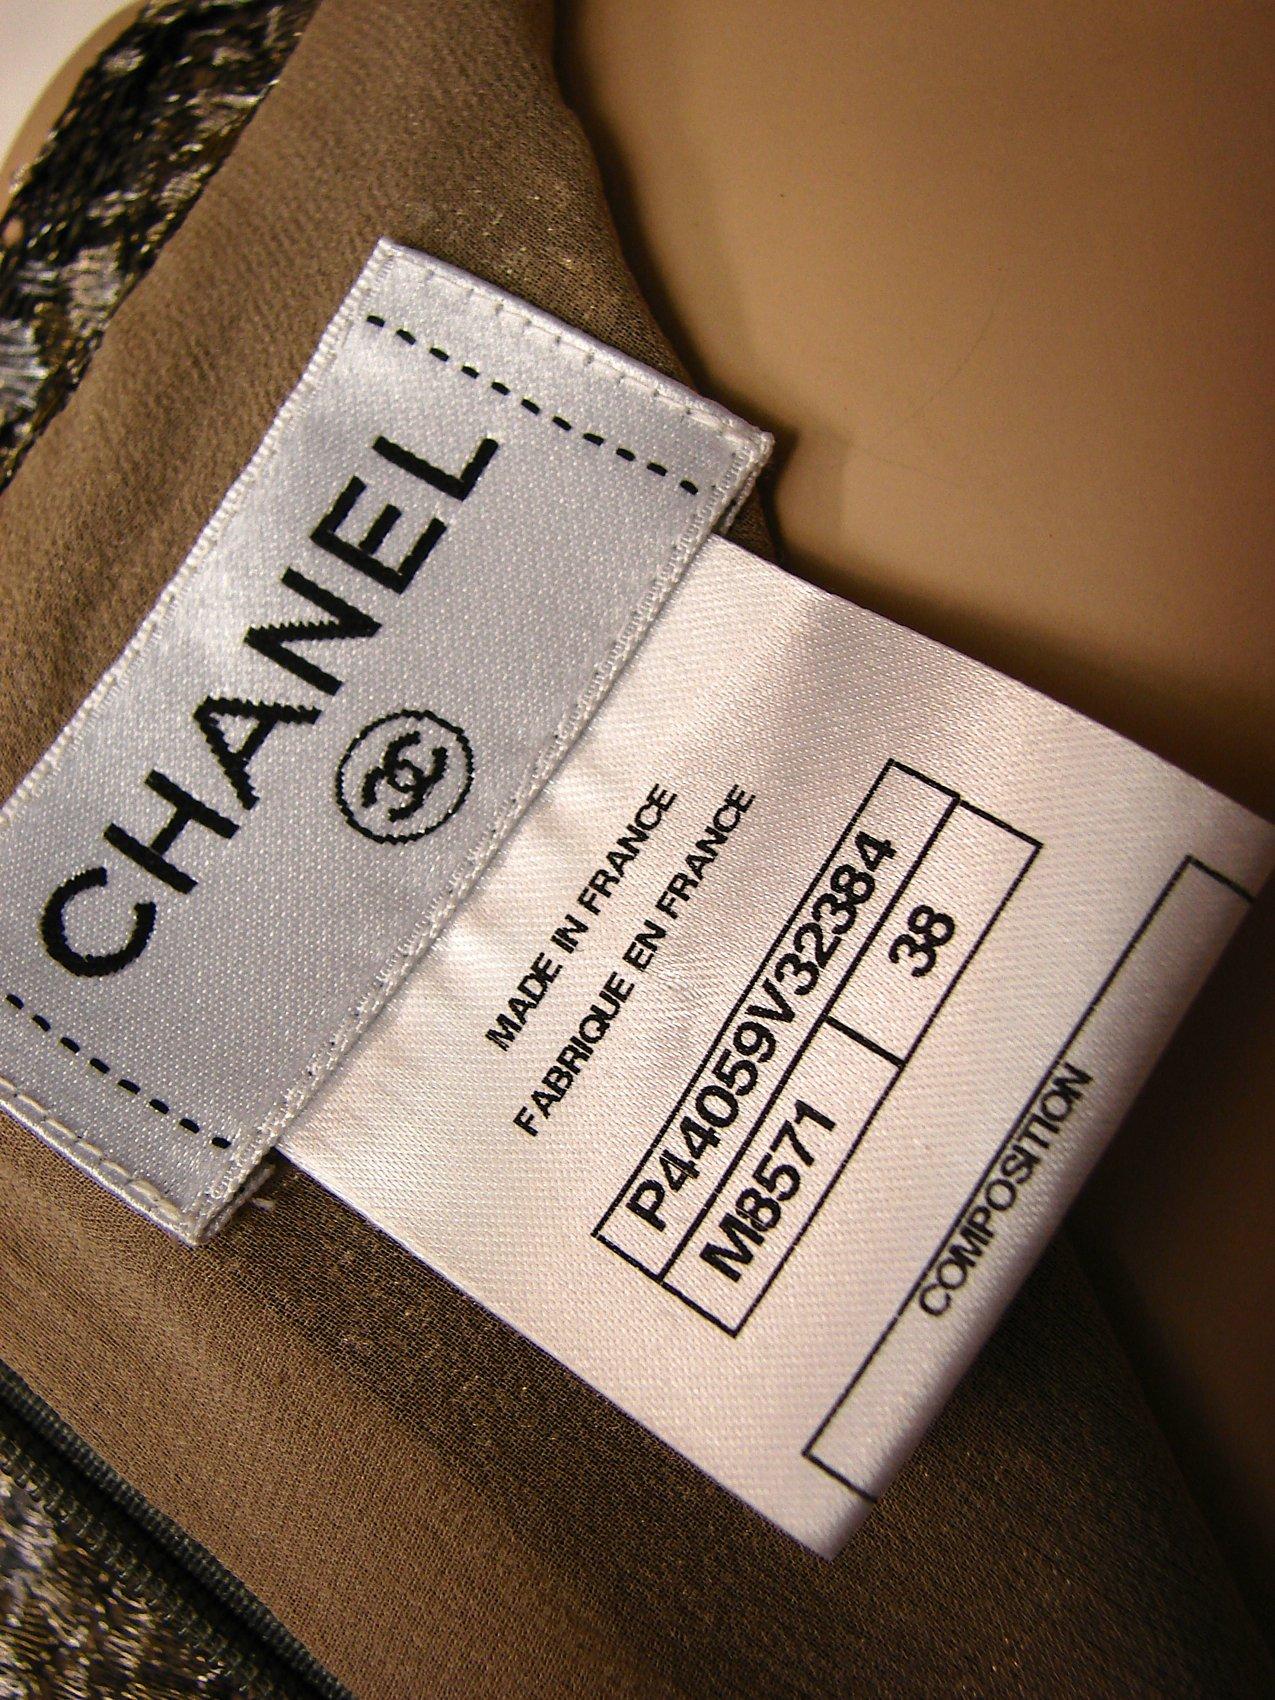 Chanel Silk Blouse Sleeveless Metallic Paisley Scalloped Lace Shell Top Sz 38 1